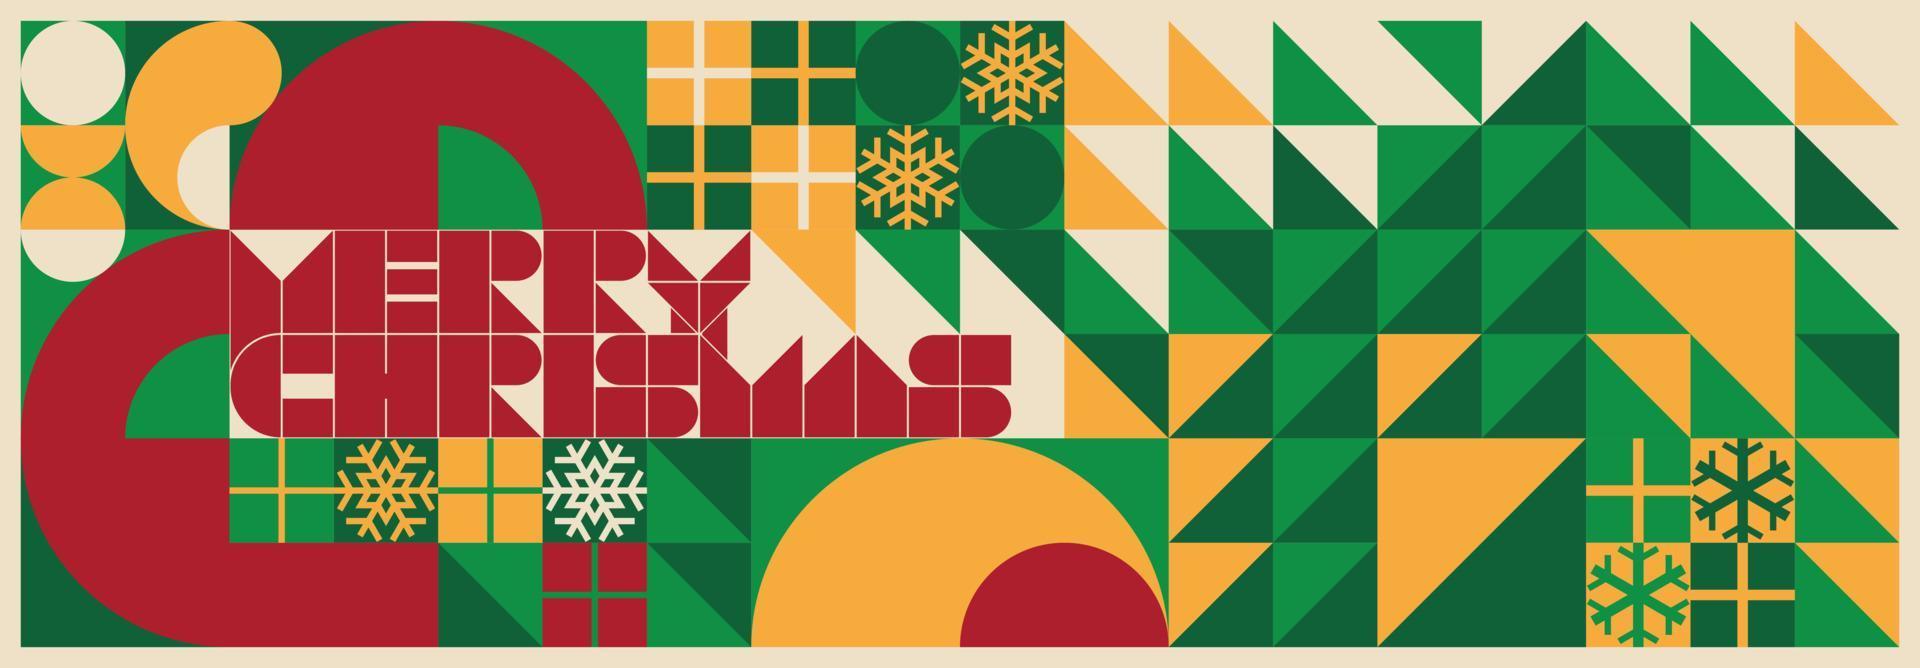 Bauhaus Style Geometric Christmas Banner vector